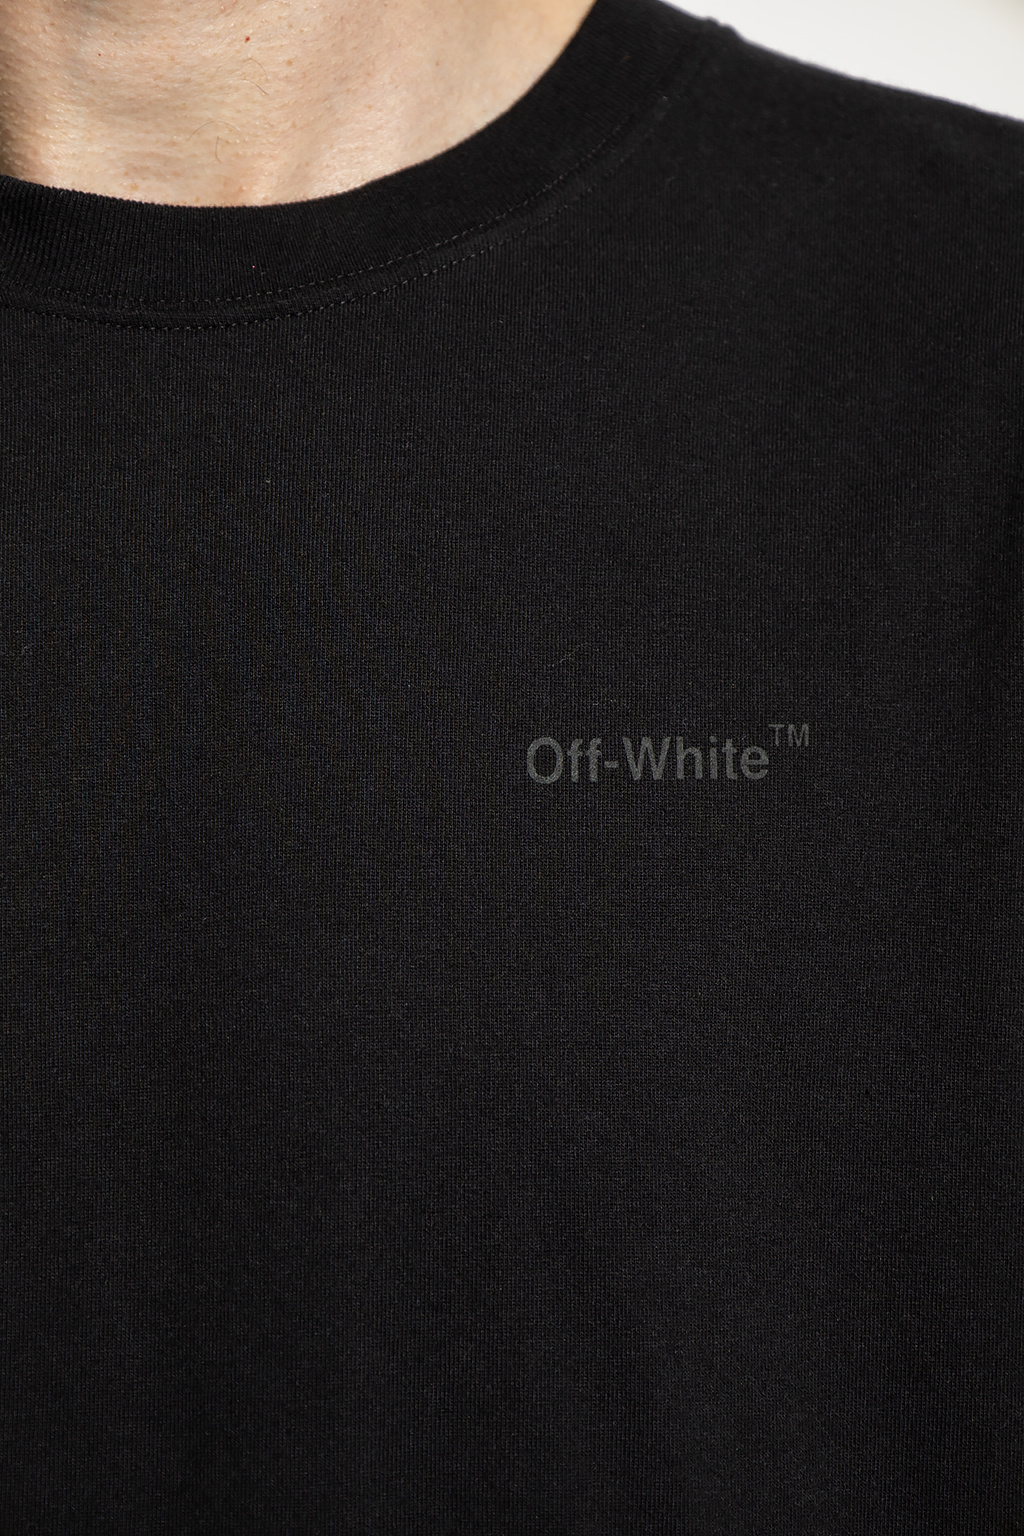 Off-White kids logo print t shirt dress item